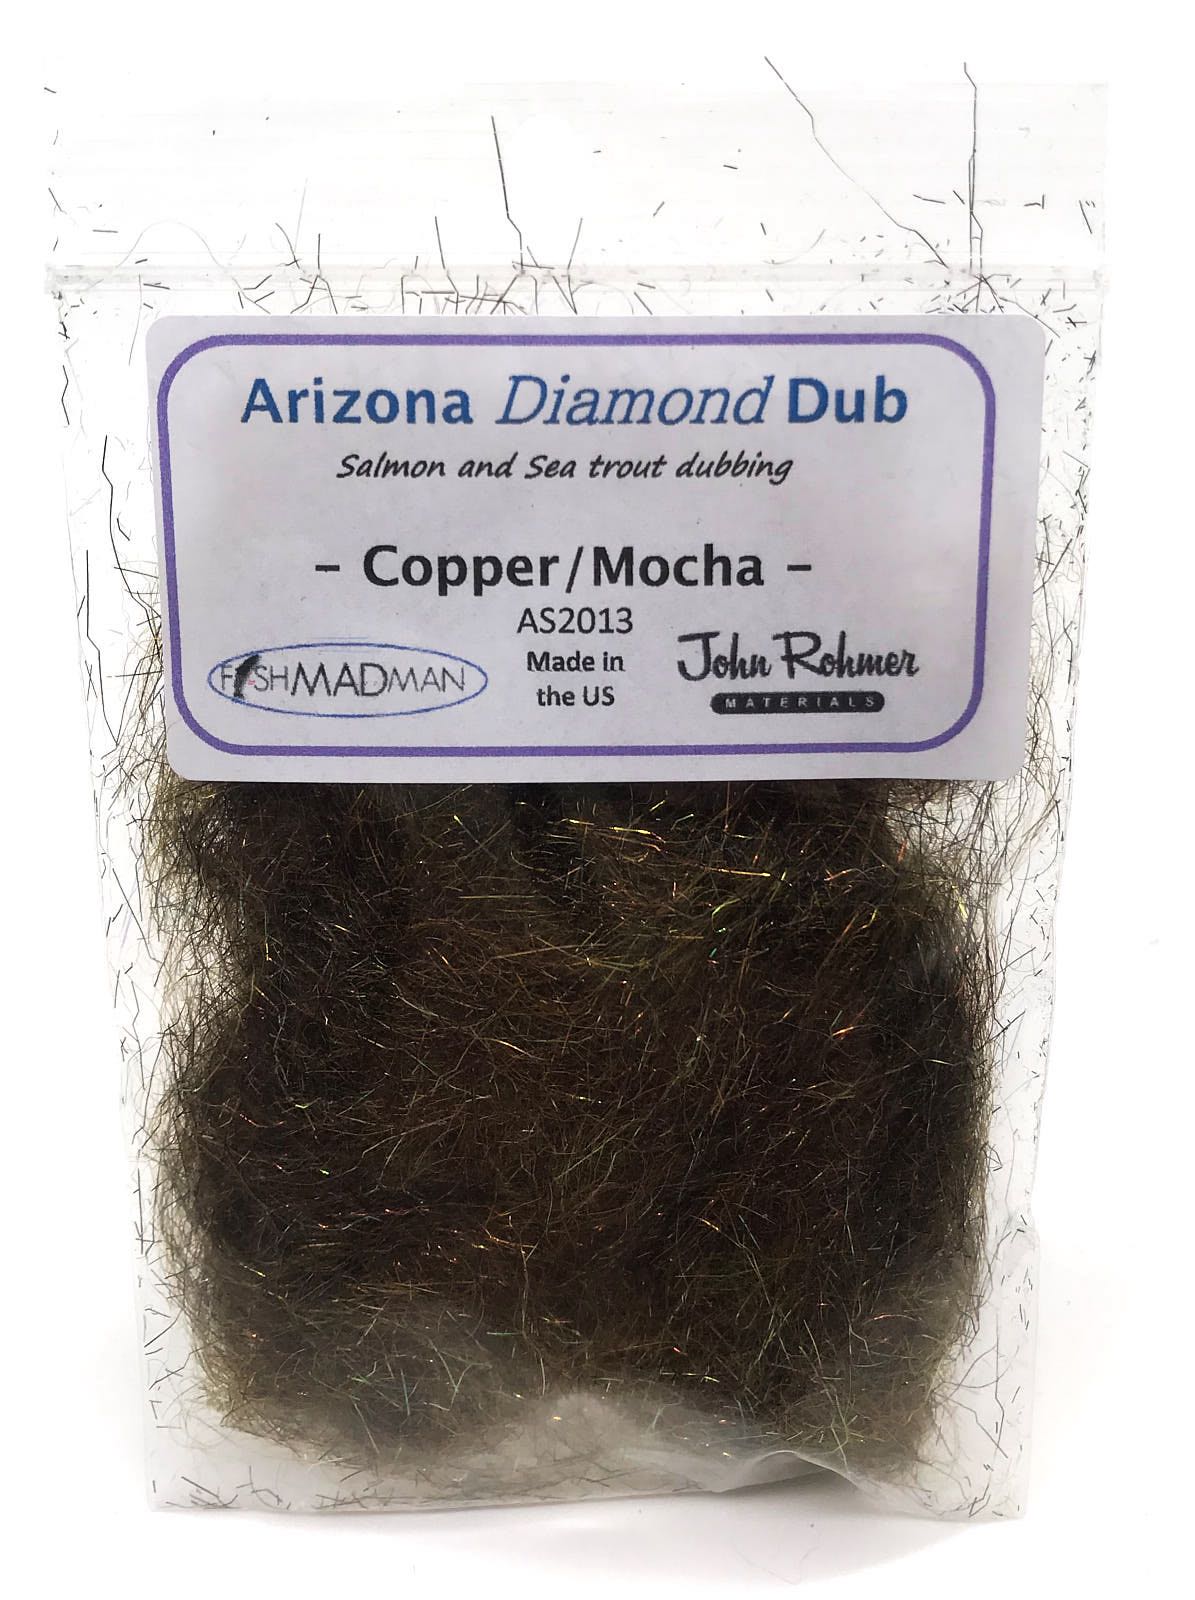 Arizona Diamond Dub Copper mocha